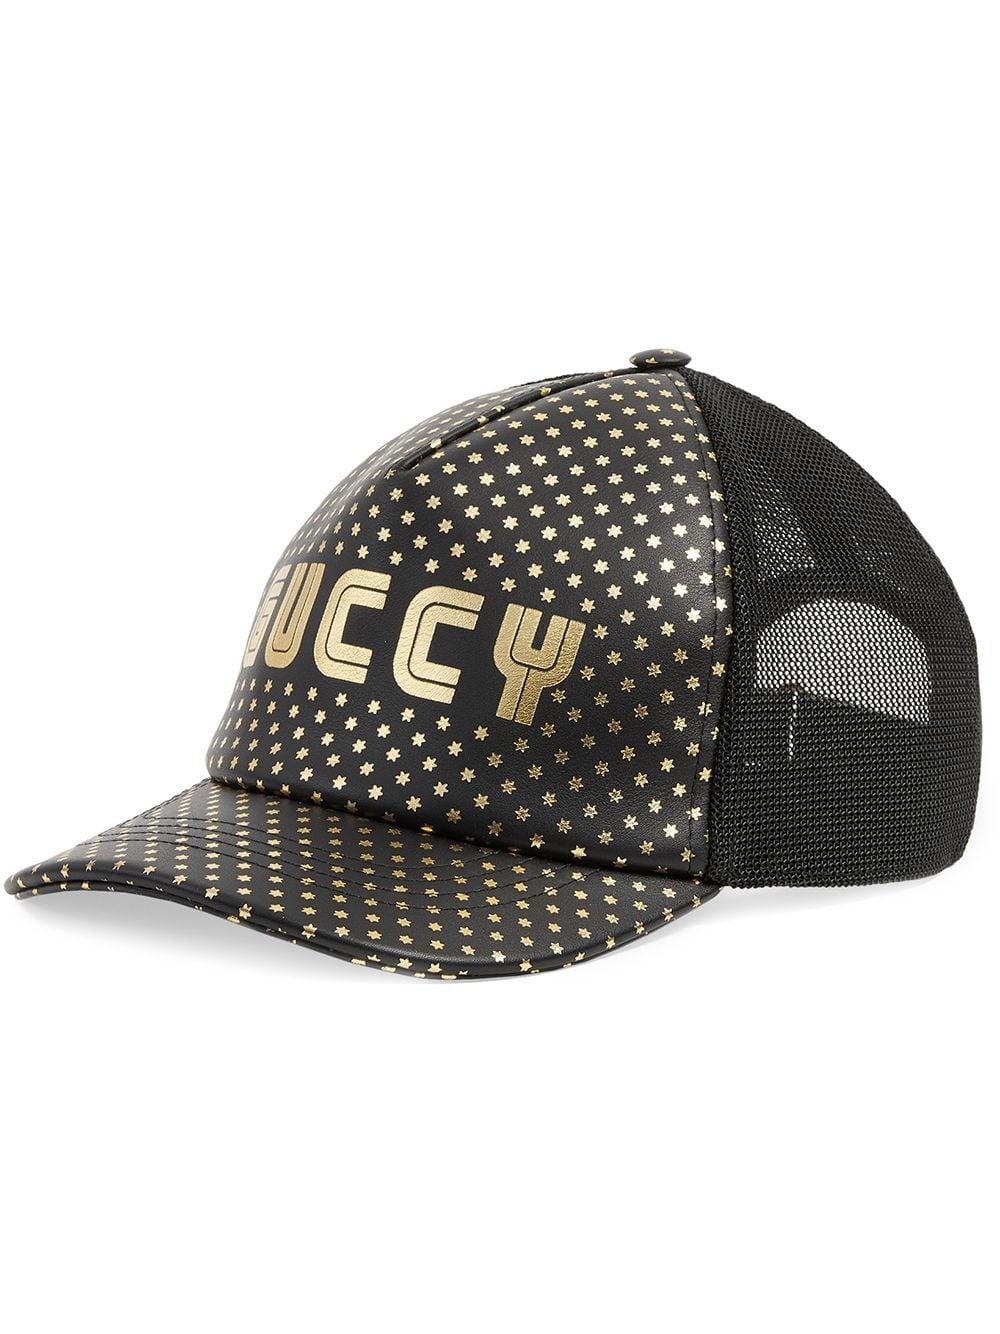 Gucci Guccy Star Print Baseball Cap in Black for Men | Lyst